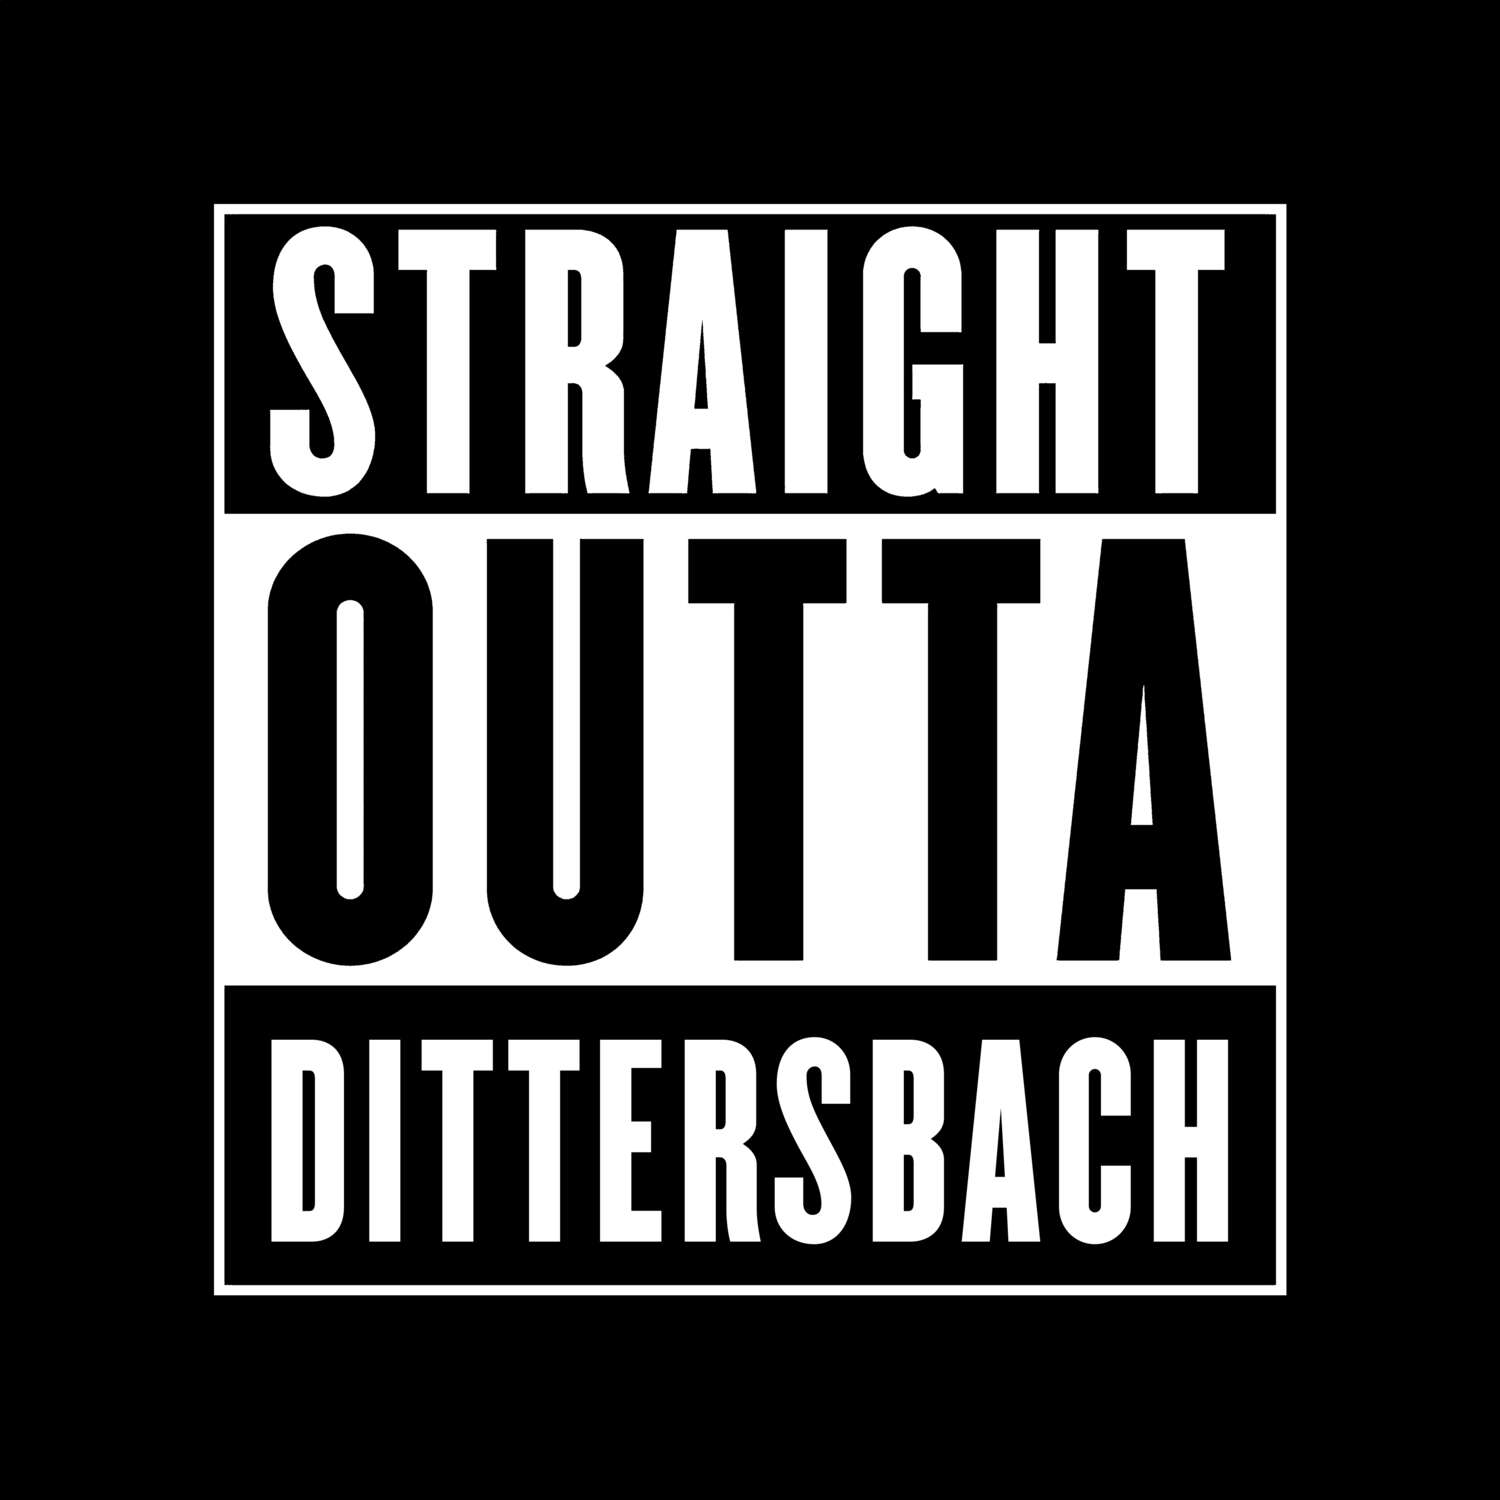 Dittersbach T-Shirt »Straight Outta«